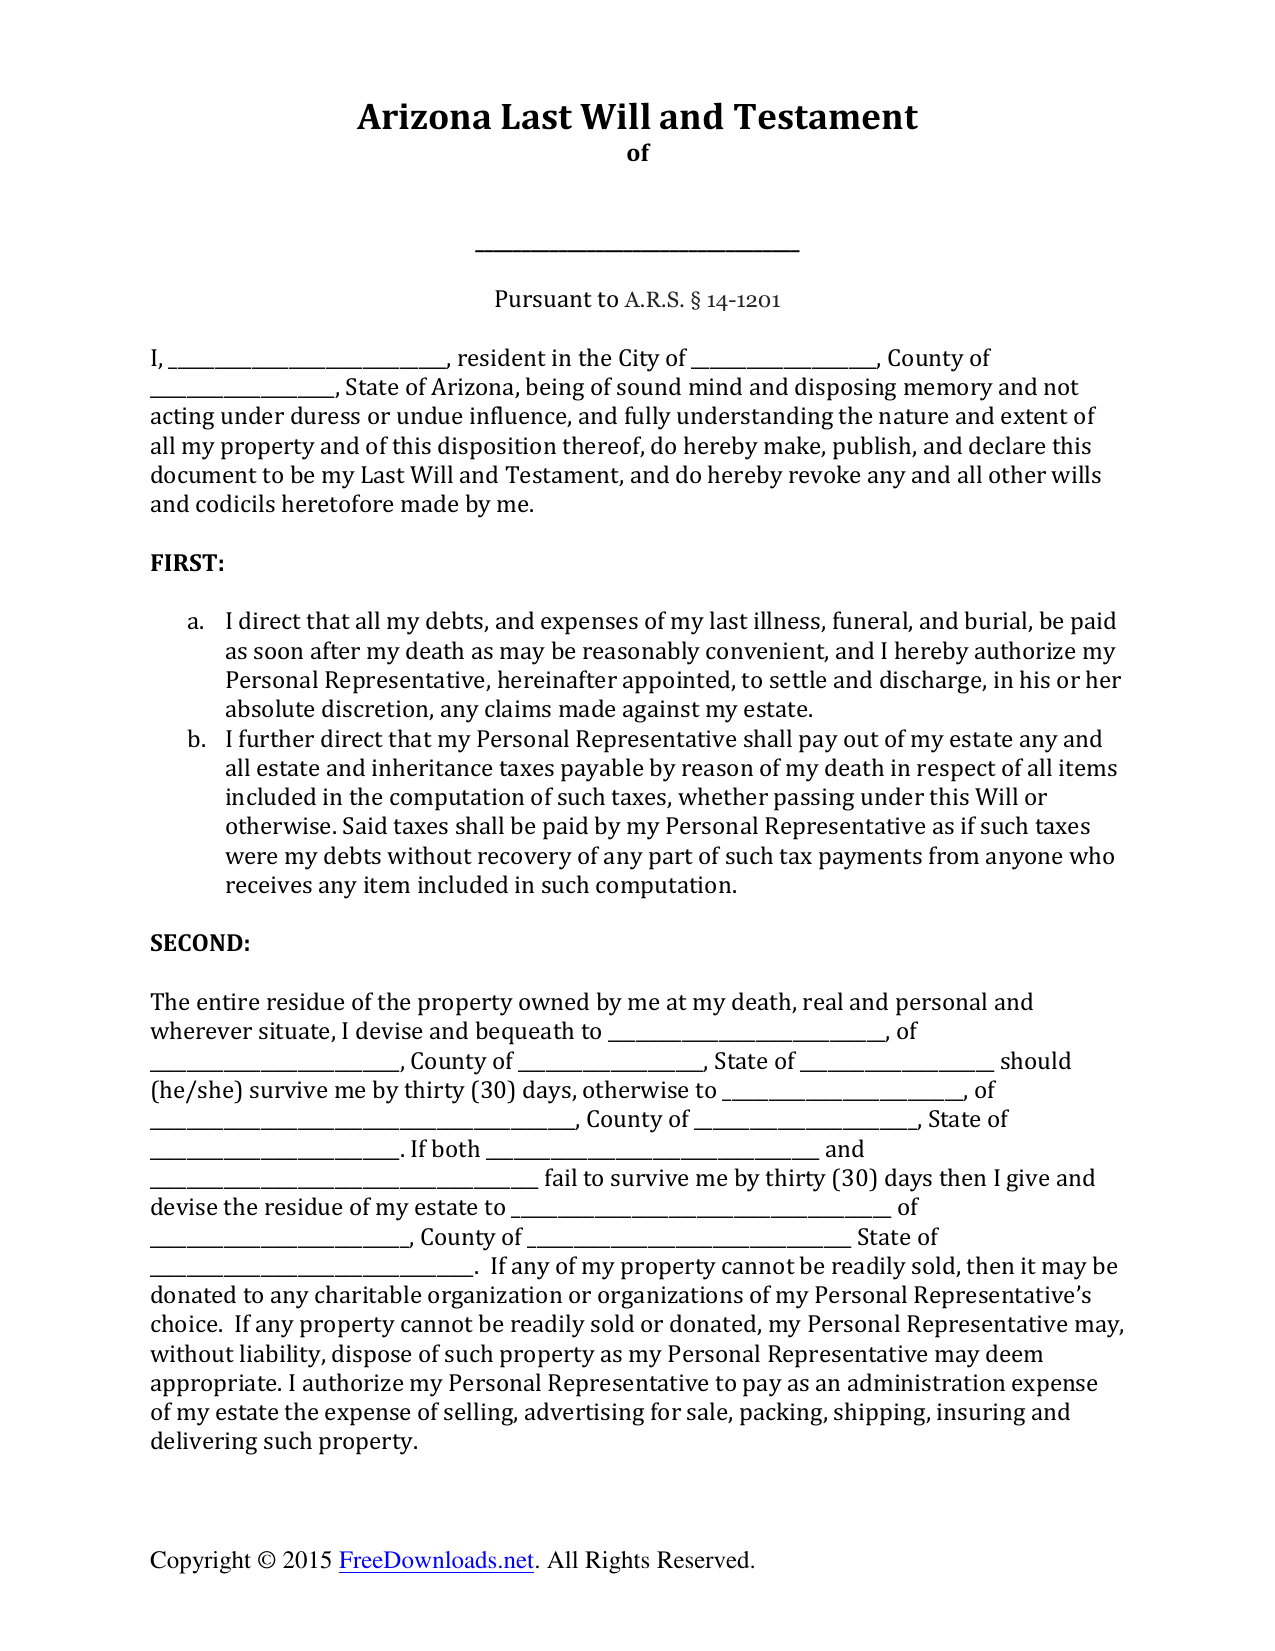 Download Arizona Last Will and Testament Form PDF RTF Word